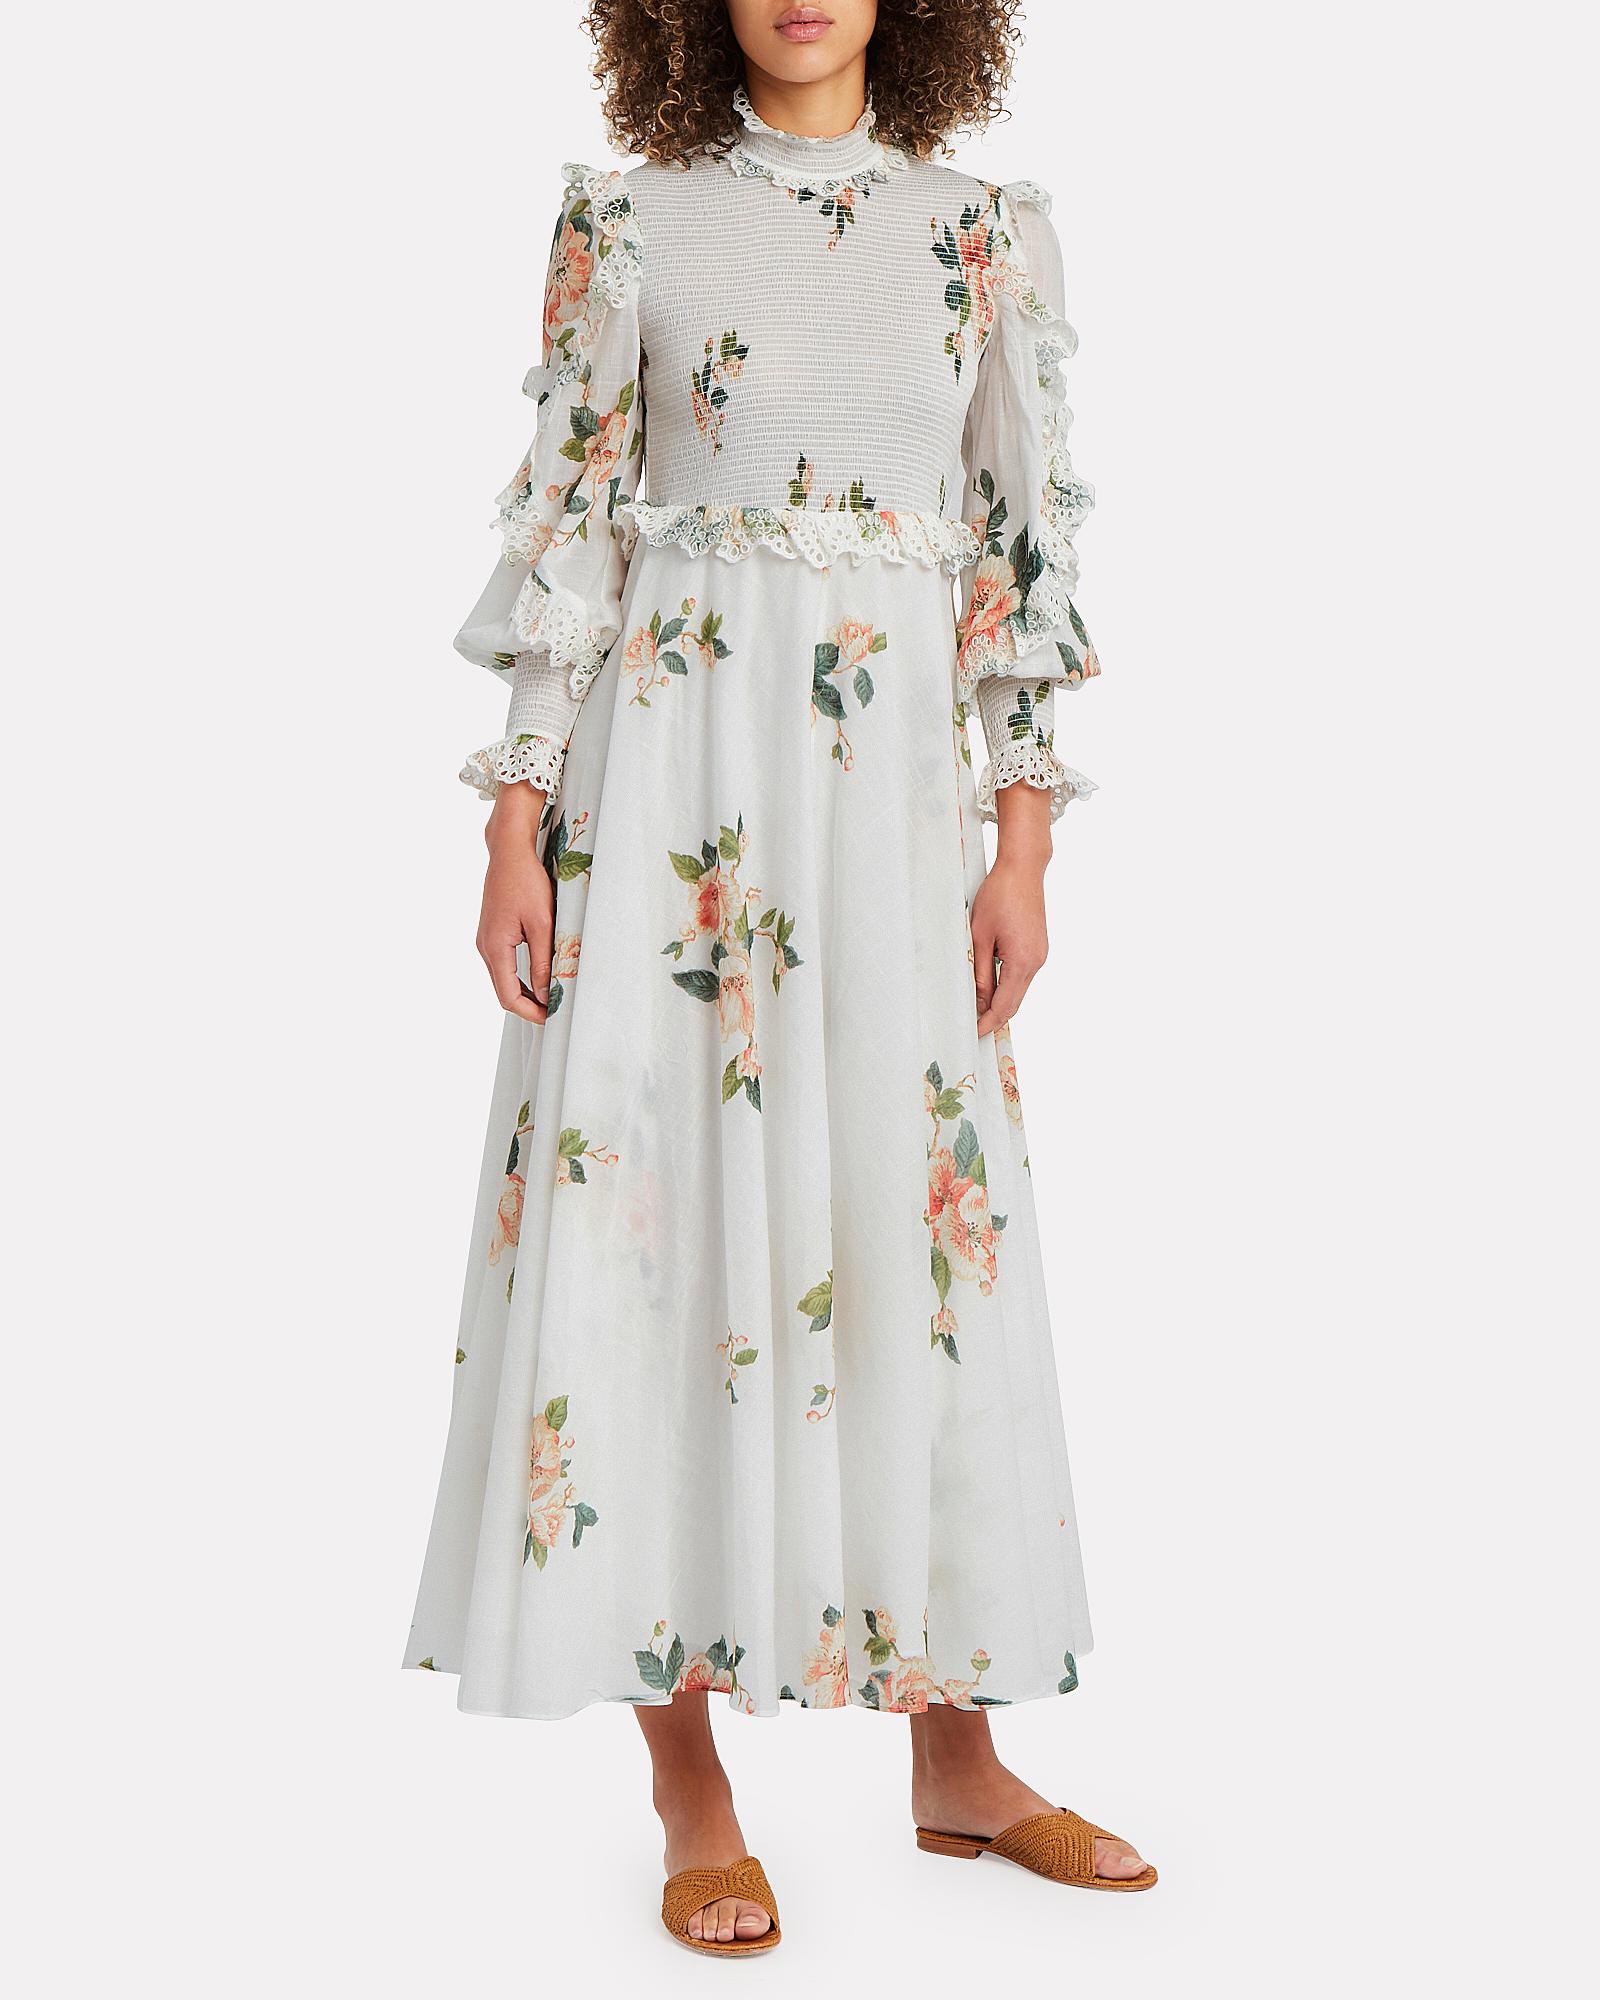 Zimmermann Cotton Kirra Shirred Floral Dress in Ivory (White) - Lyst